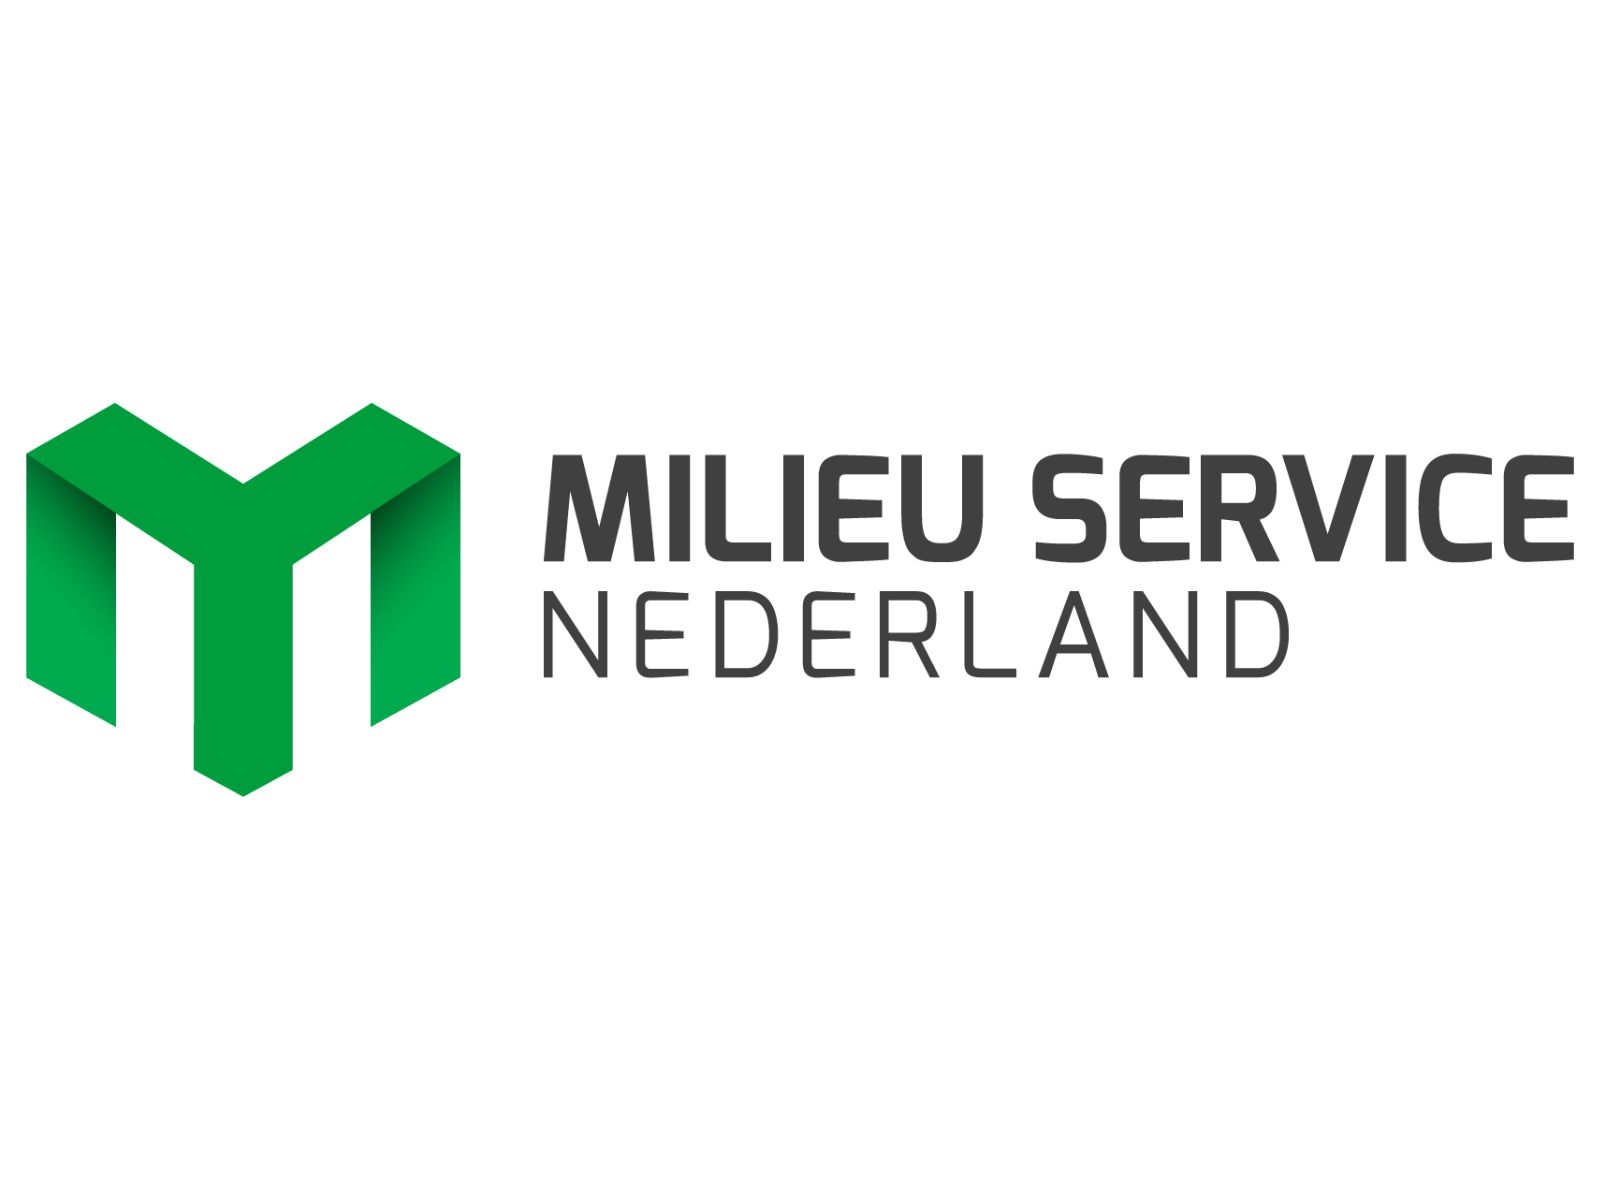 Milieu Service Nederland